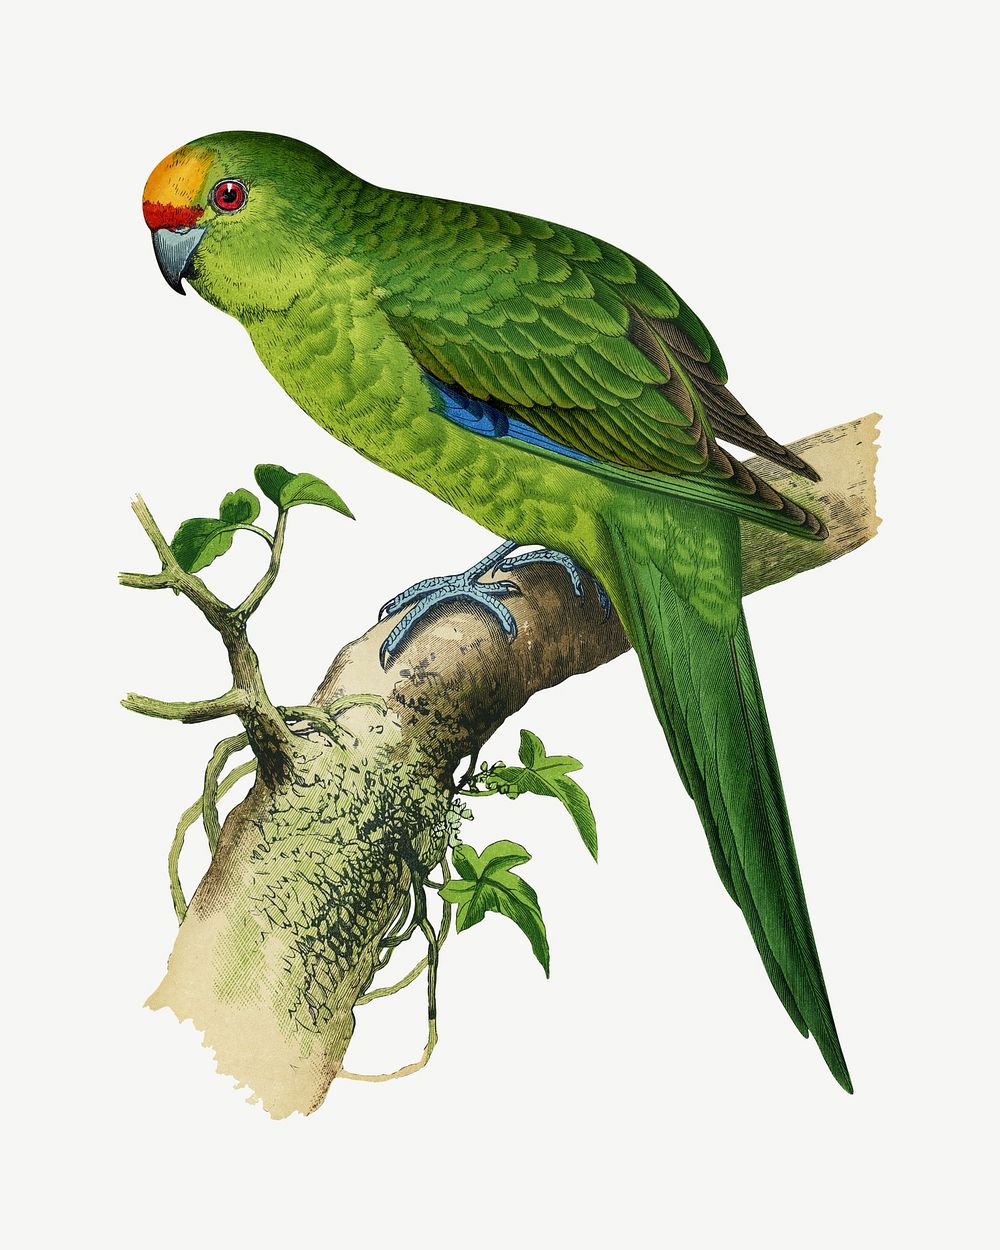 Golden-crowned parakeet, vintage bird illustration psd. Remixed by rawpixel.